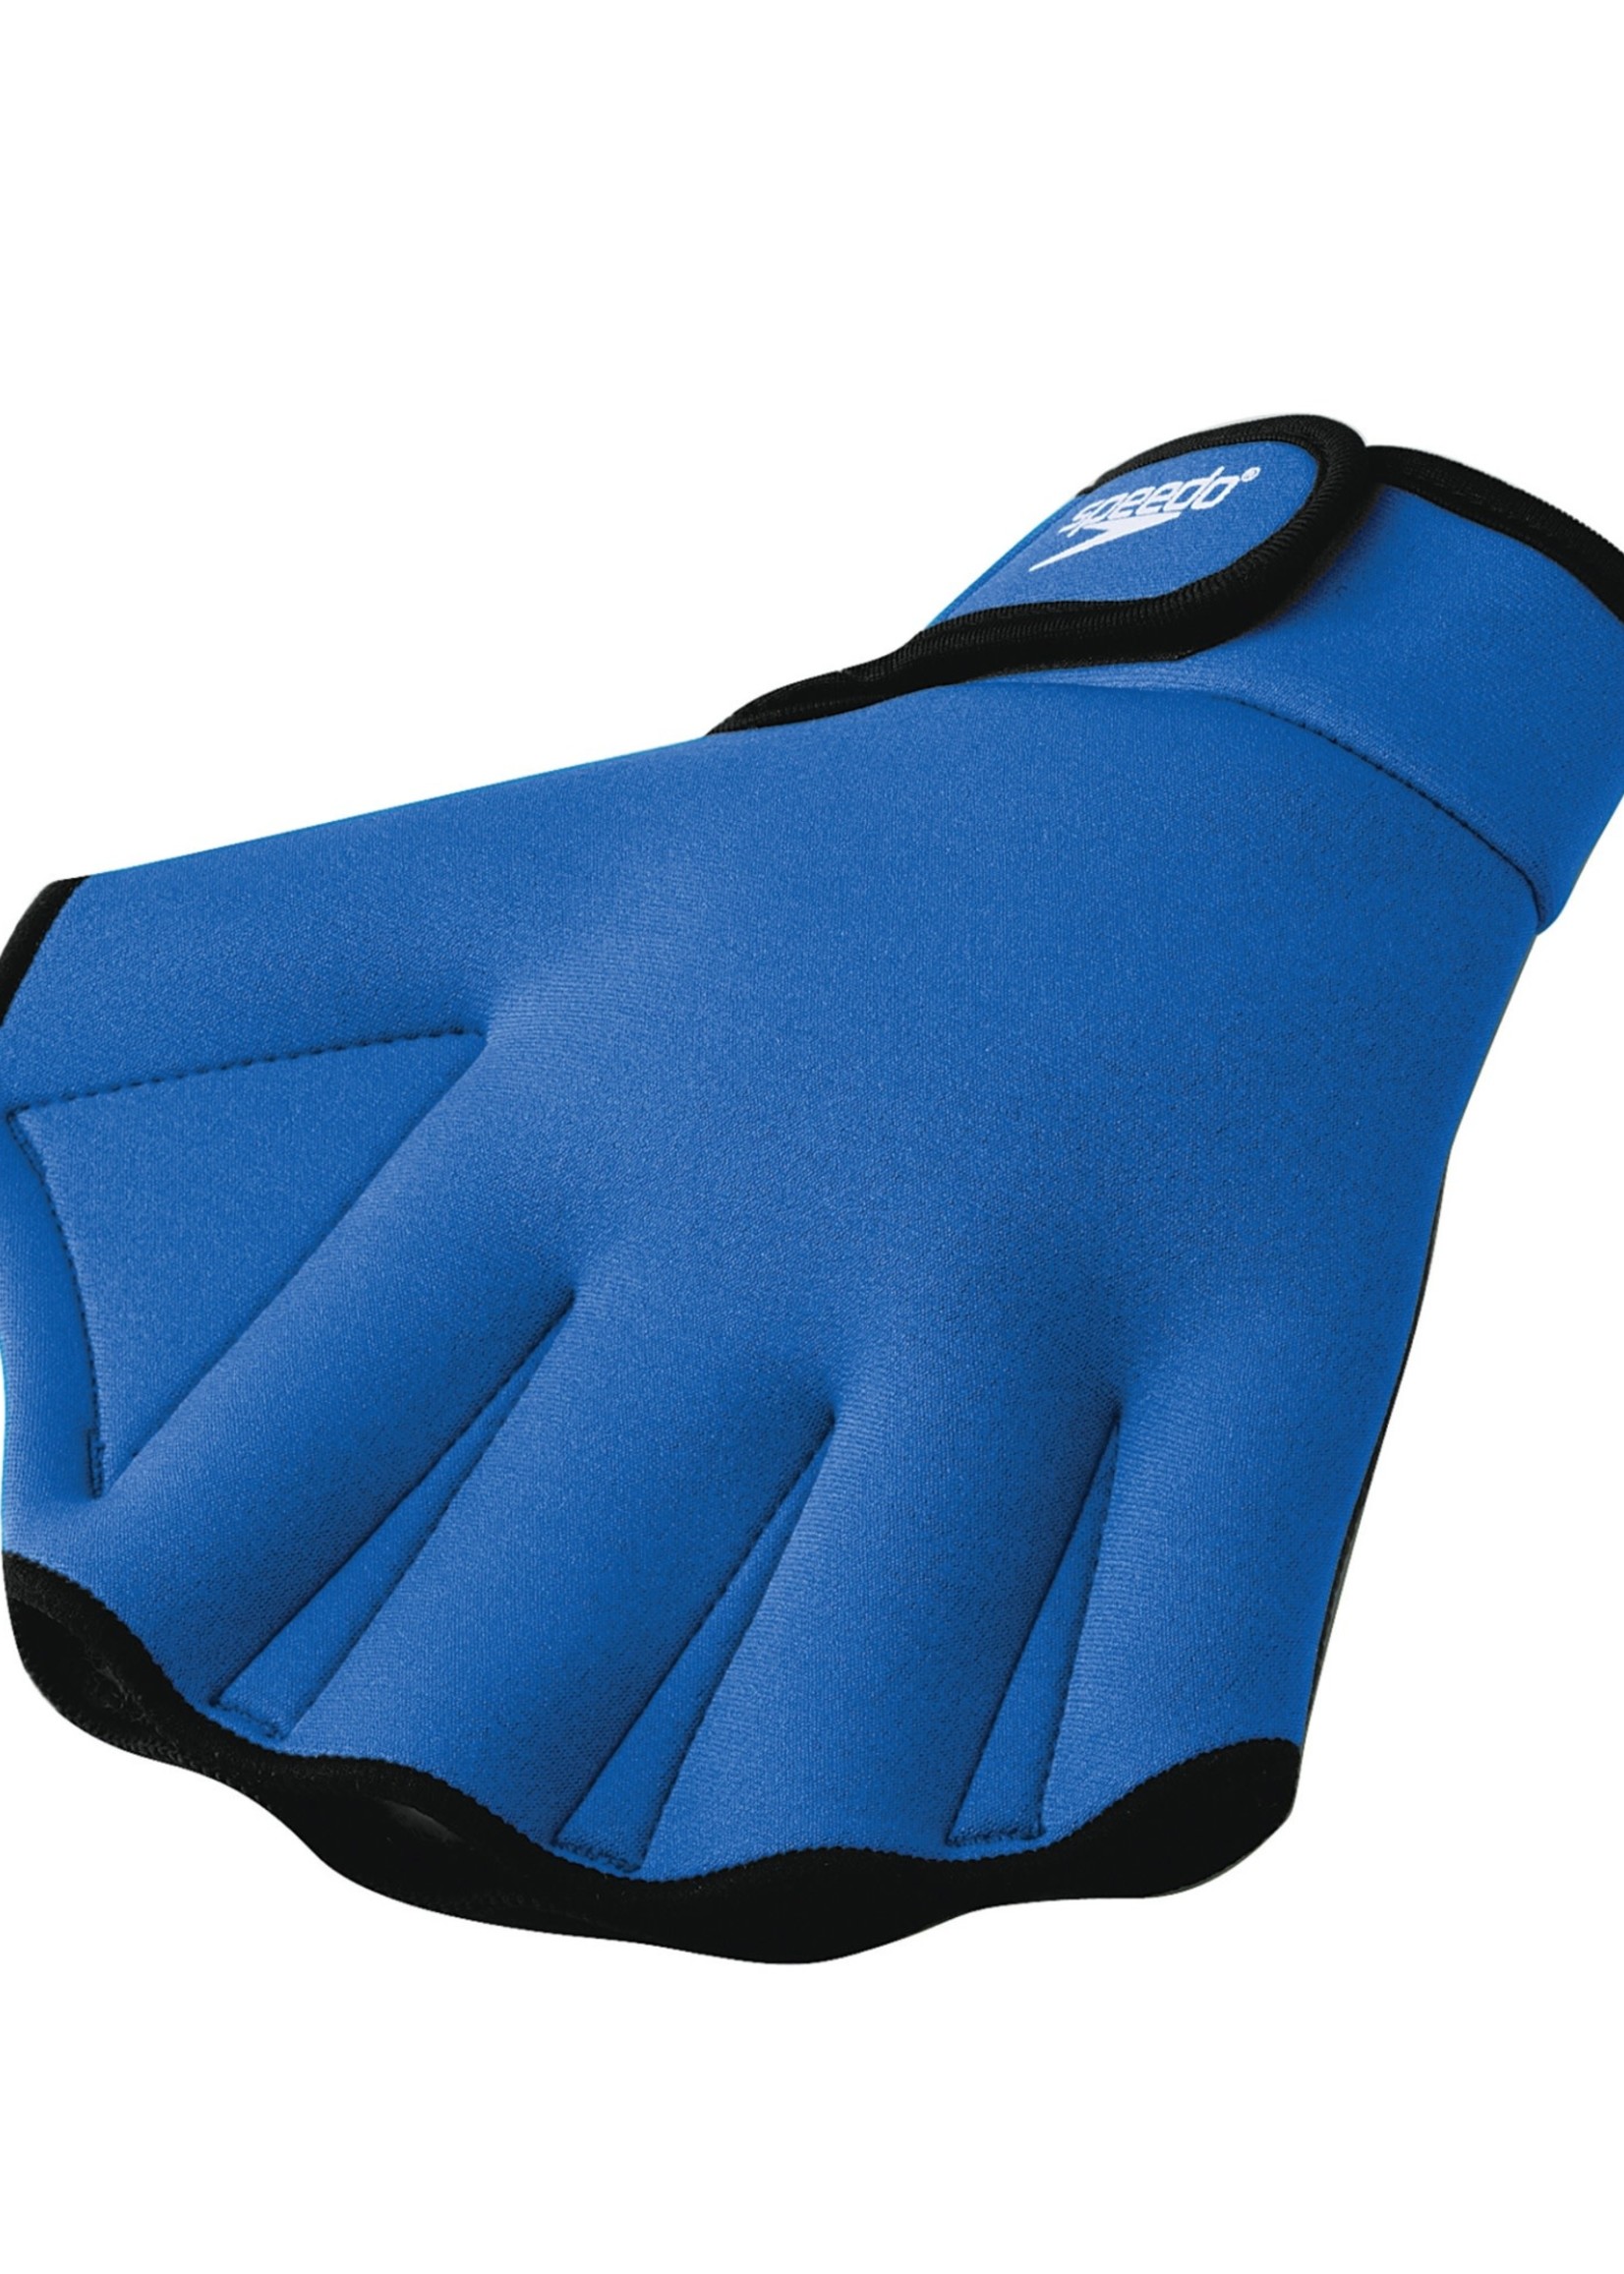 Aquatic Fitness Gloves